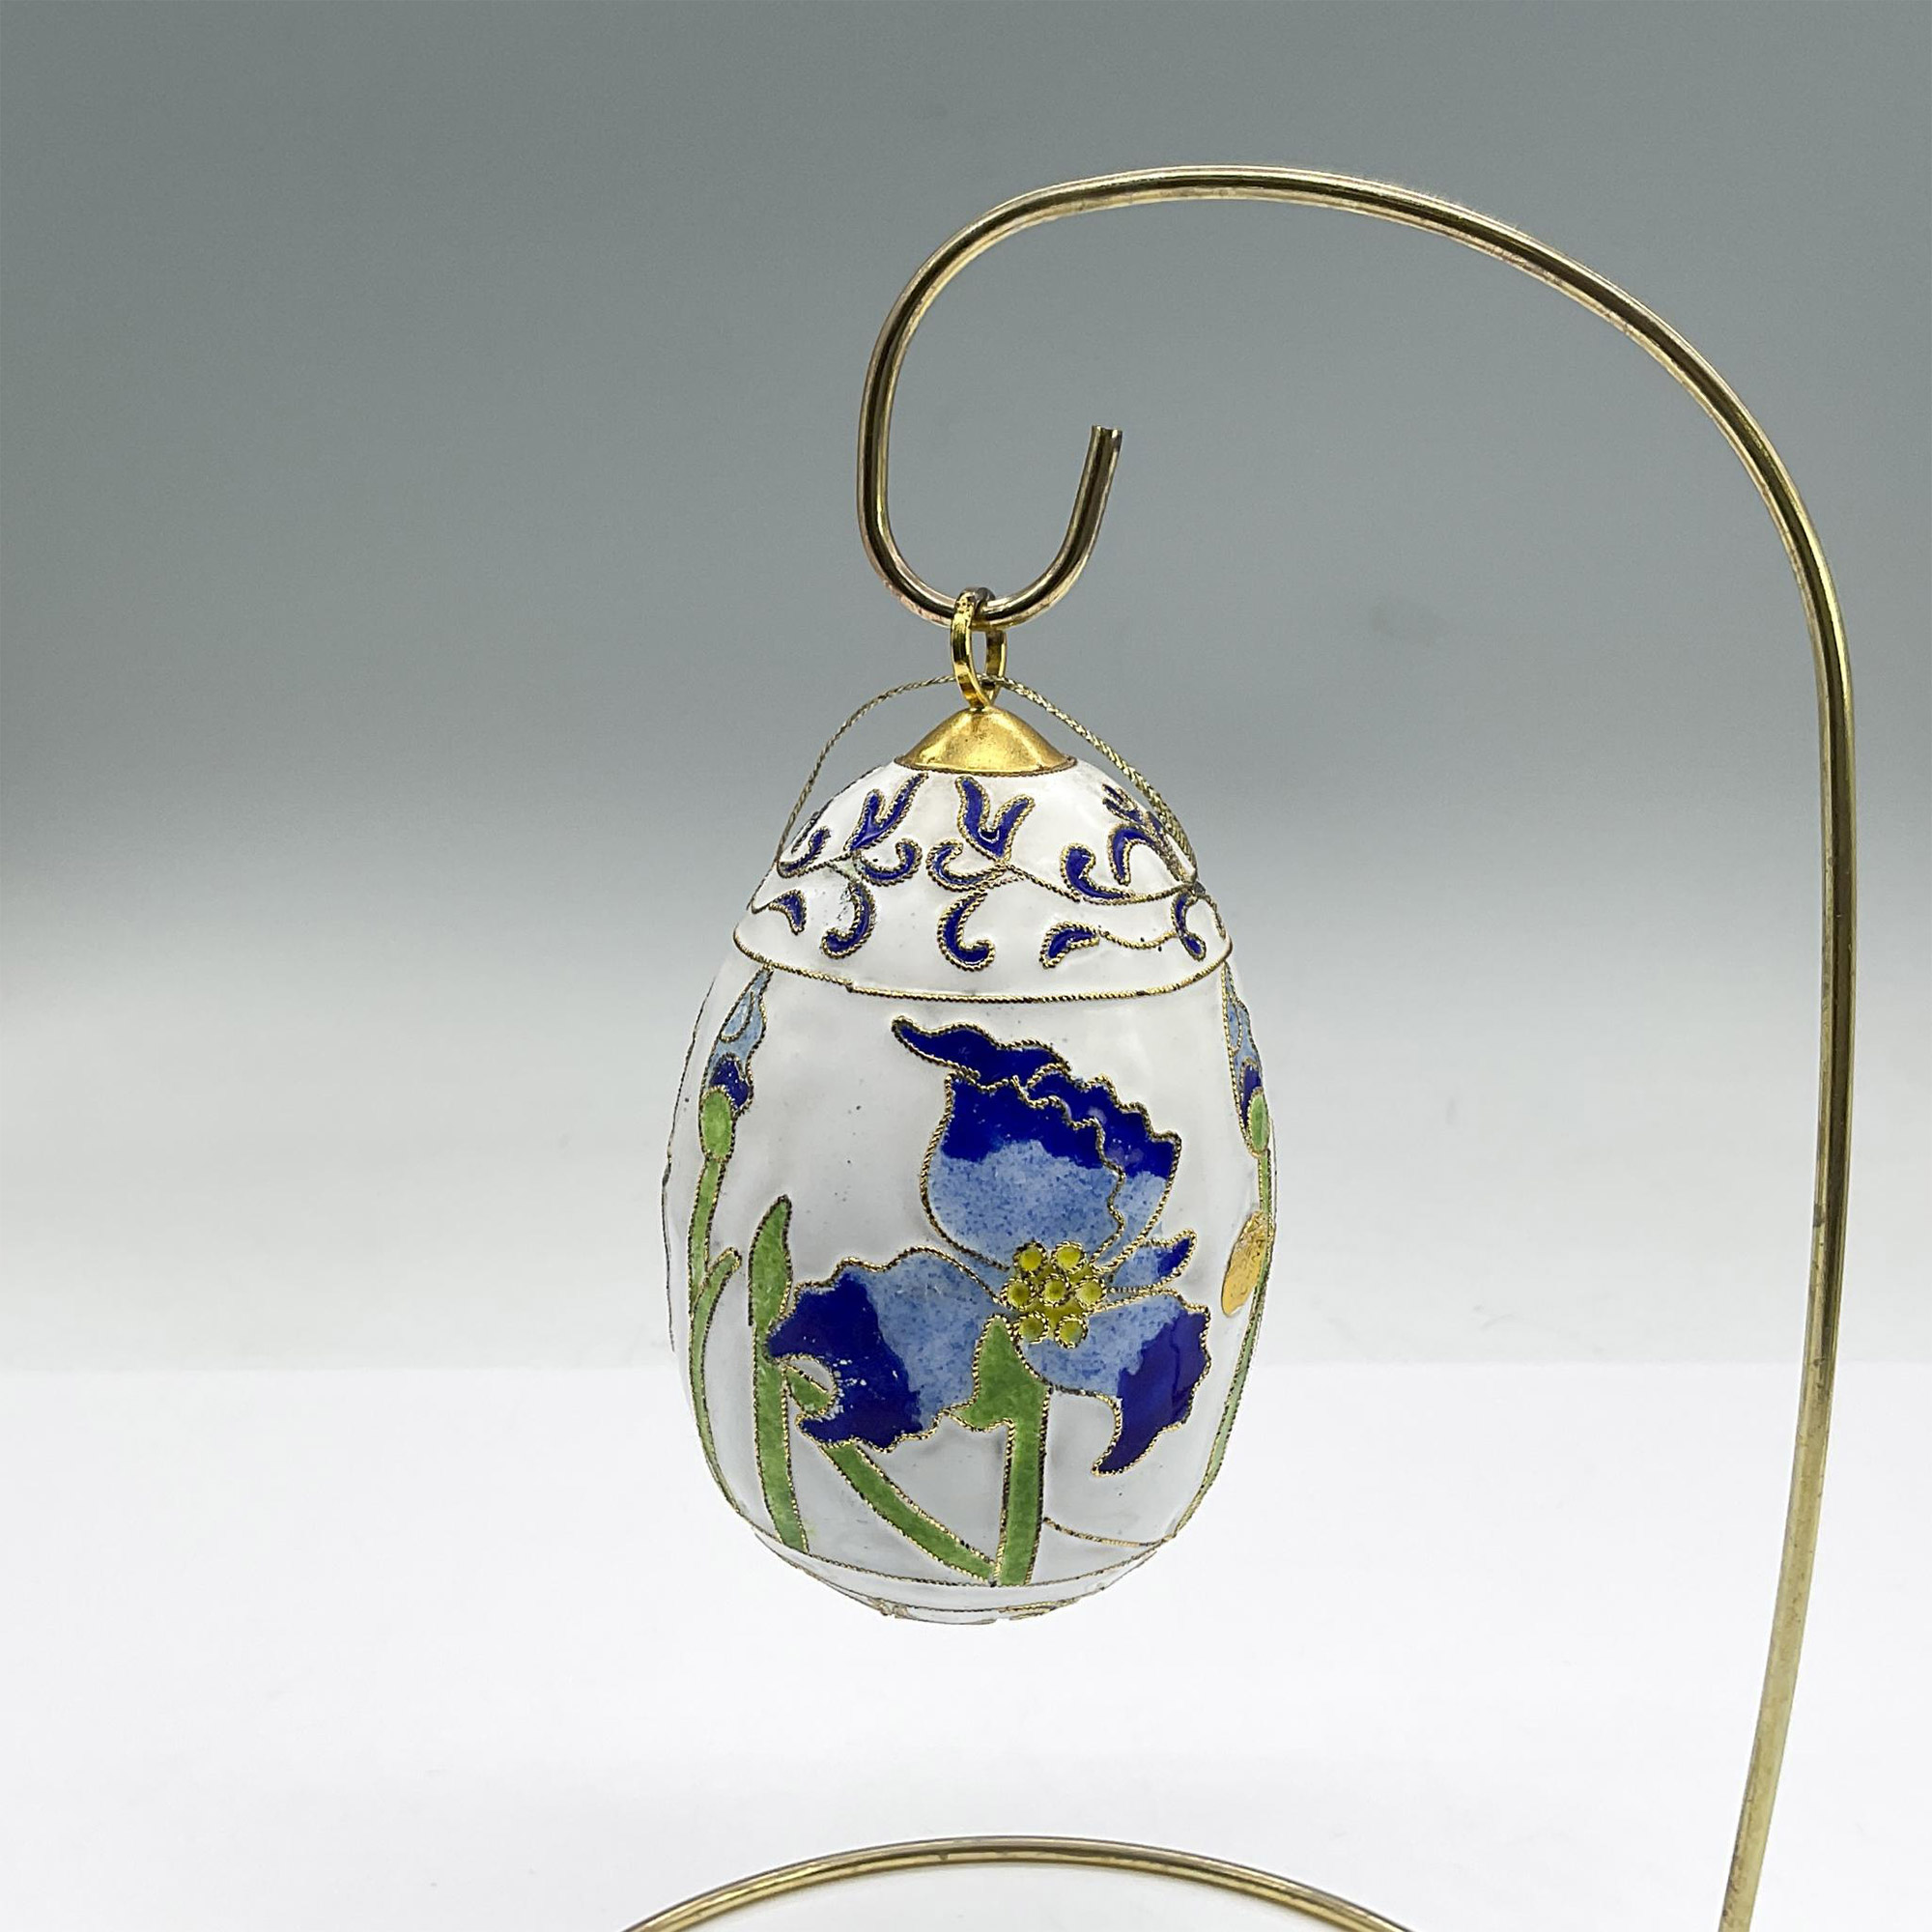 Vintage Cloisonne Enamel Egg Ornament, Blue Flowers